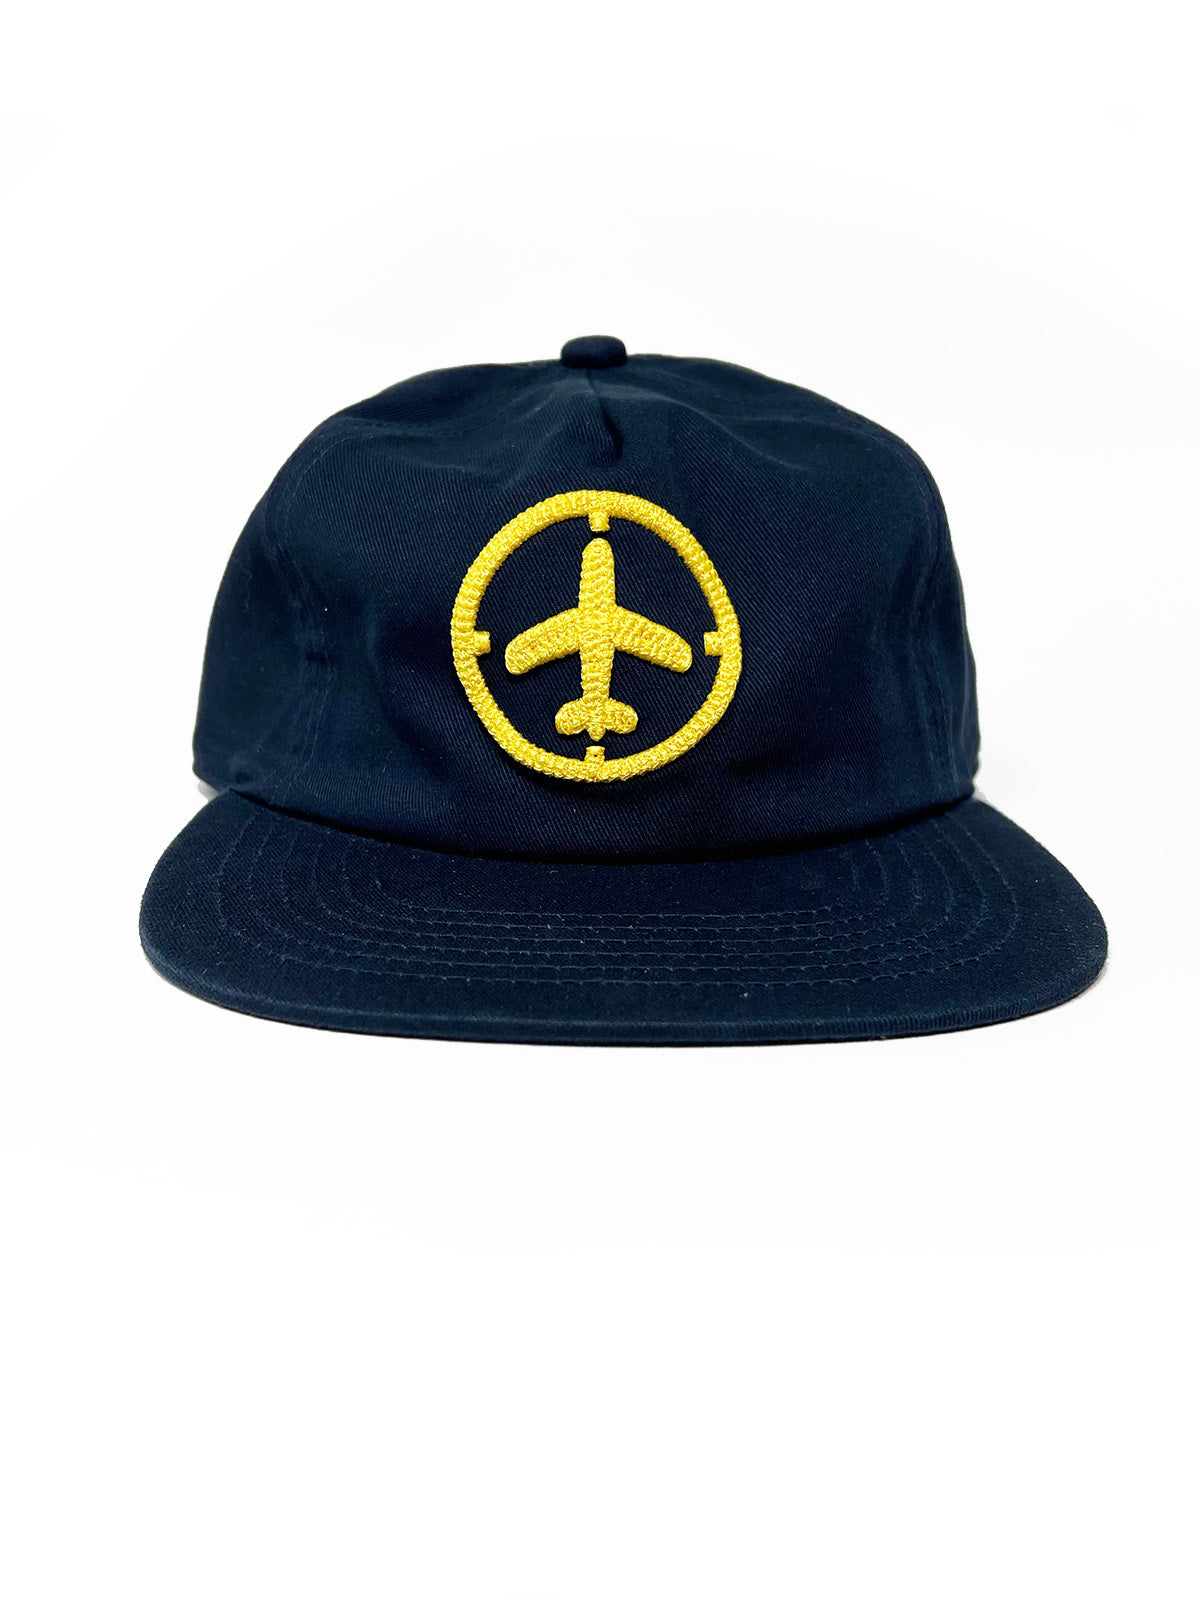 Navy painters cap with yellow Aviator logo.